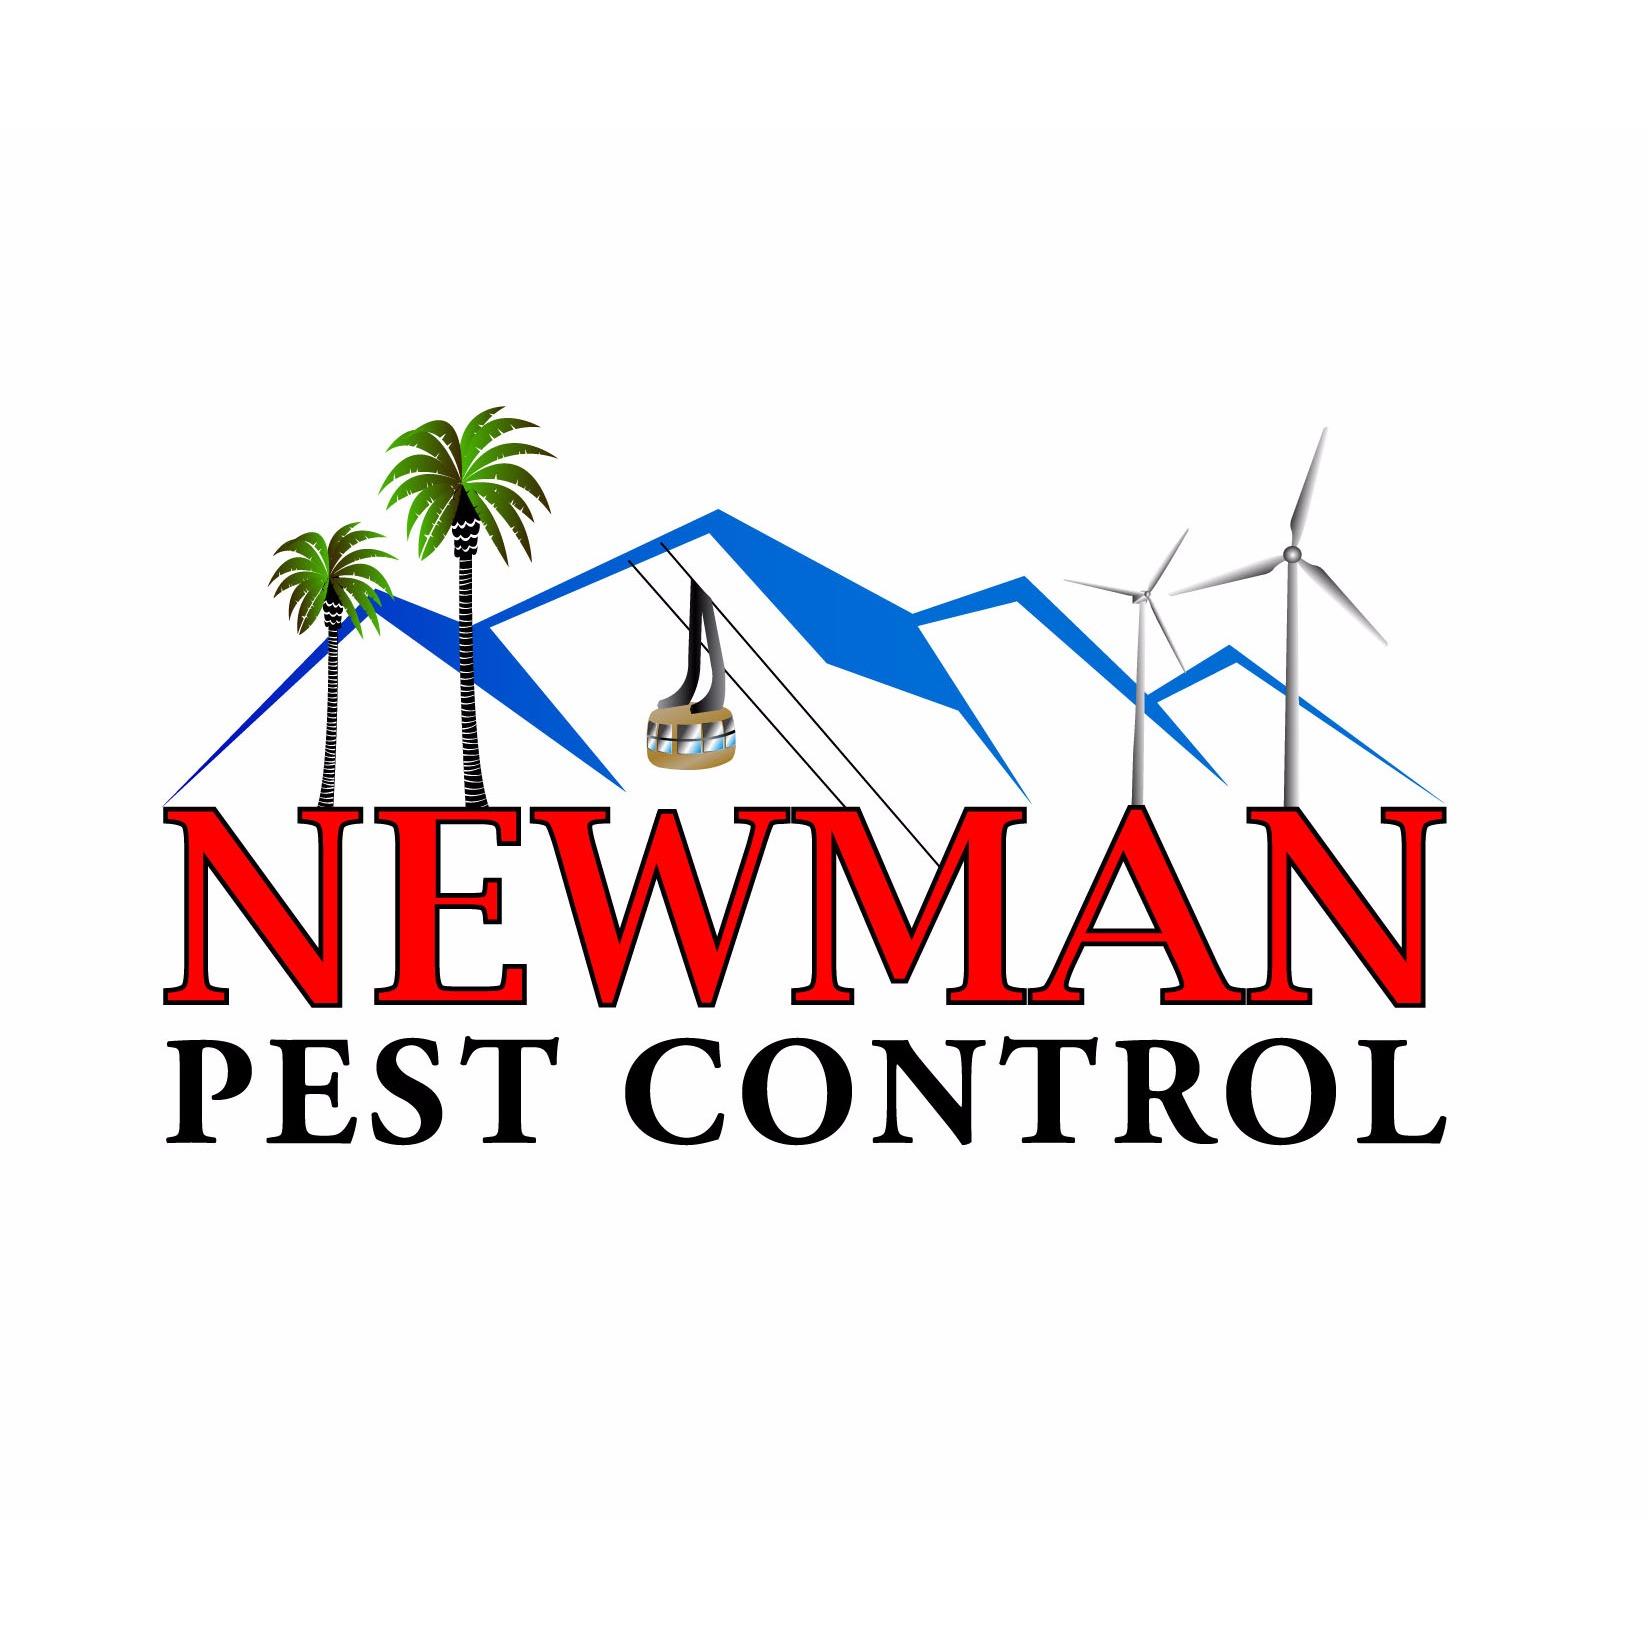 Newman Termite & Pest Control